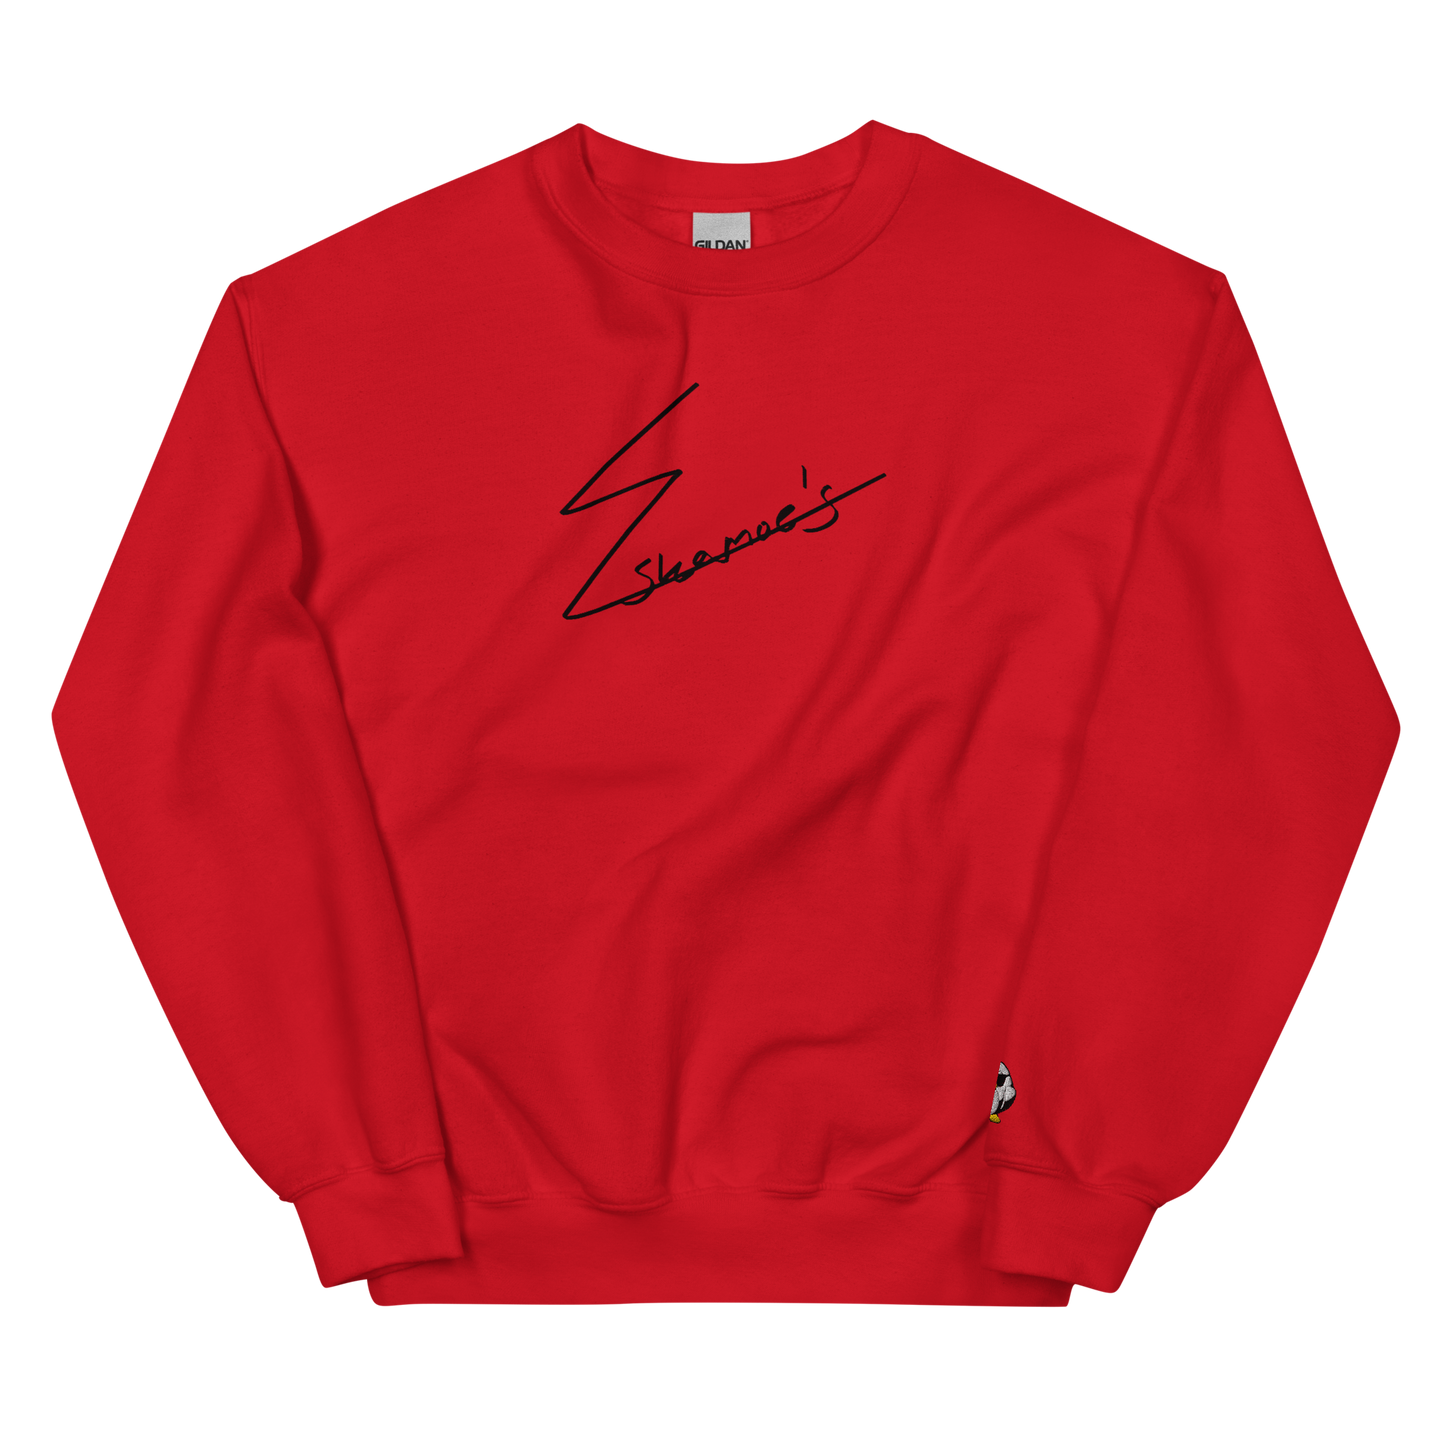 Signature Embroidered Sweatshirt - Unisex